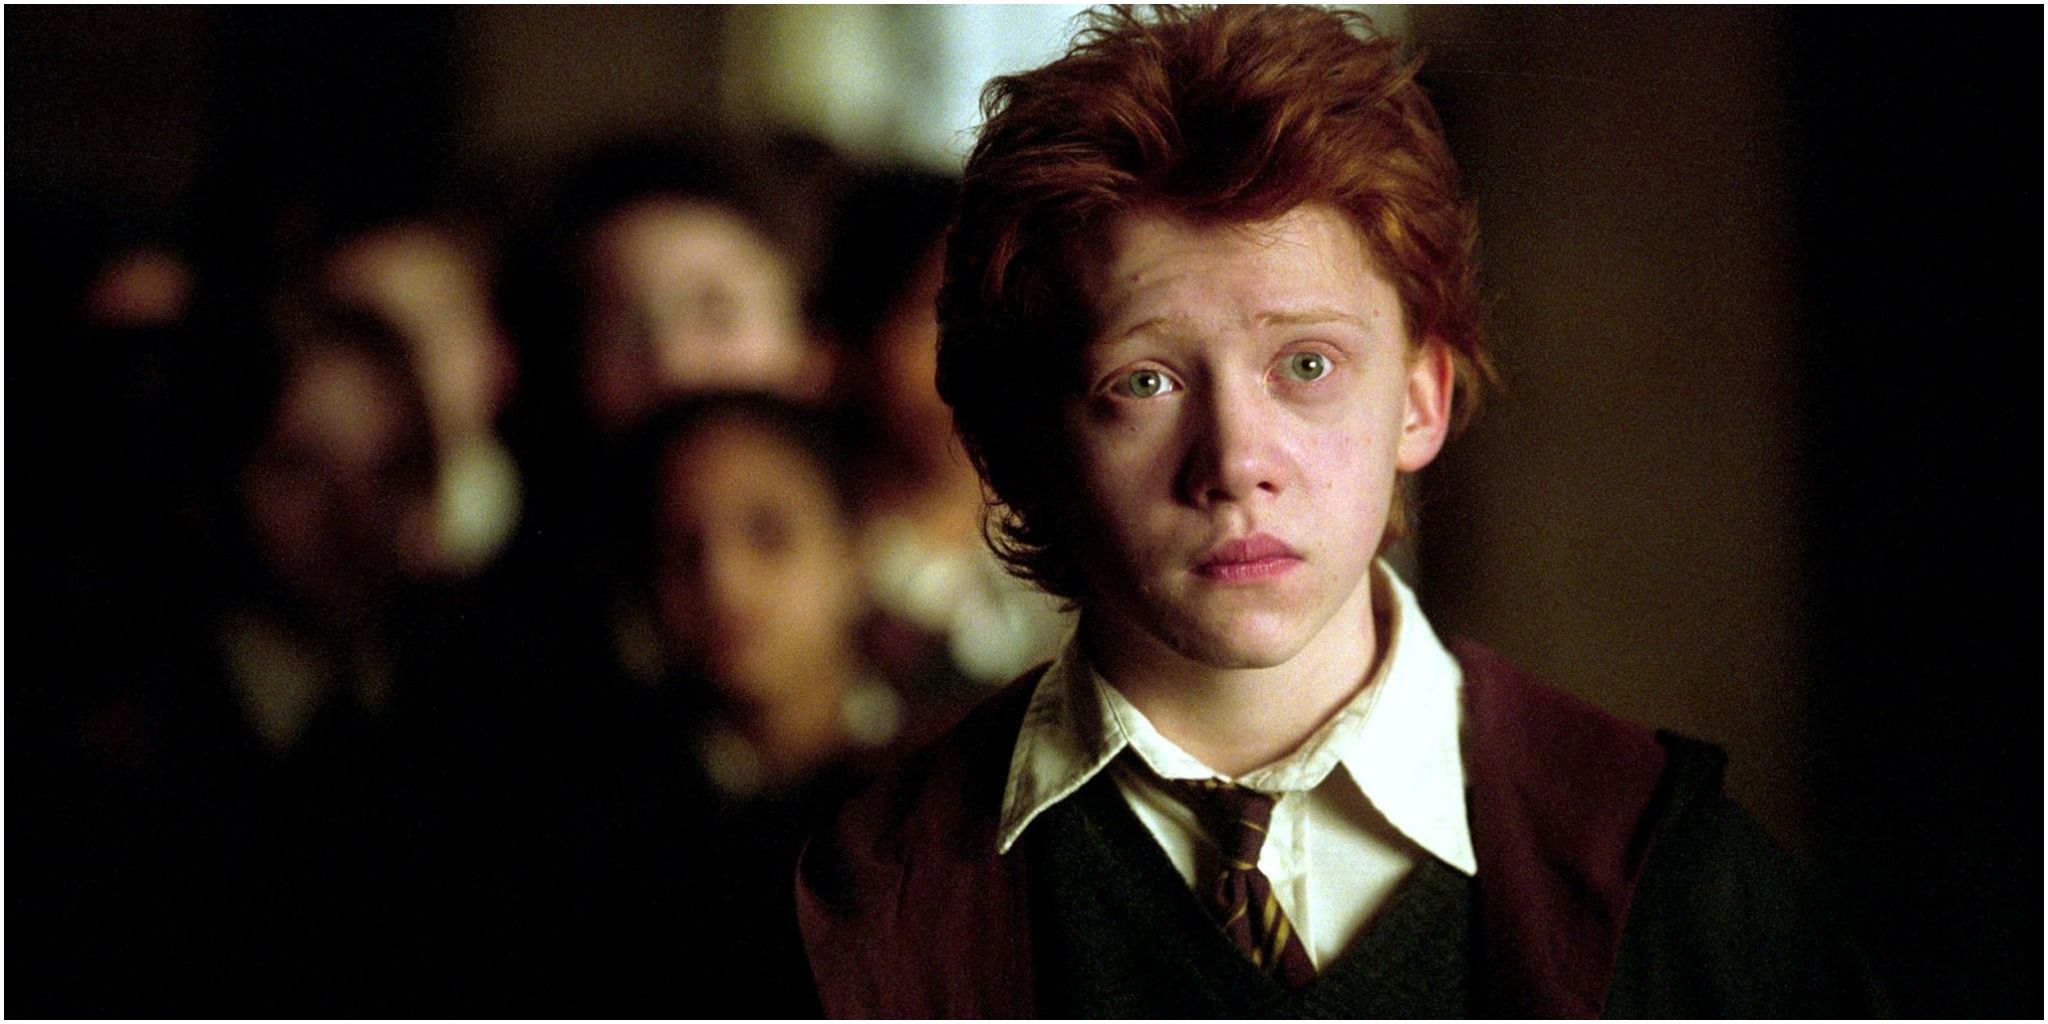 Ron Weasley in Harry Potter